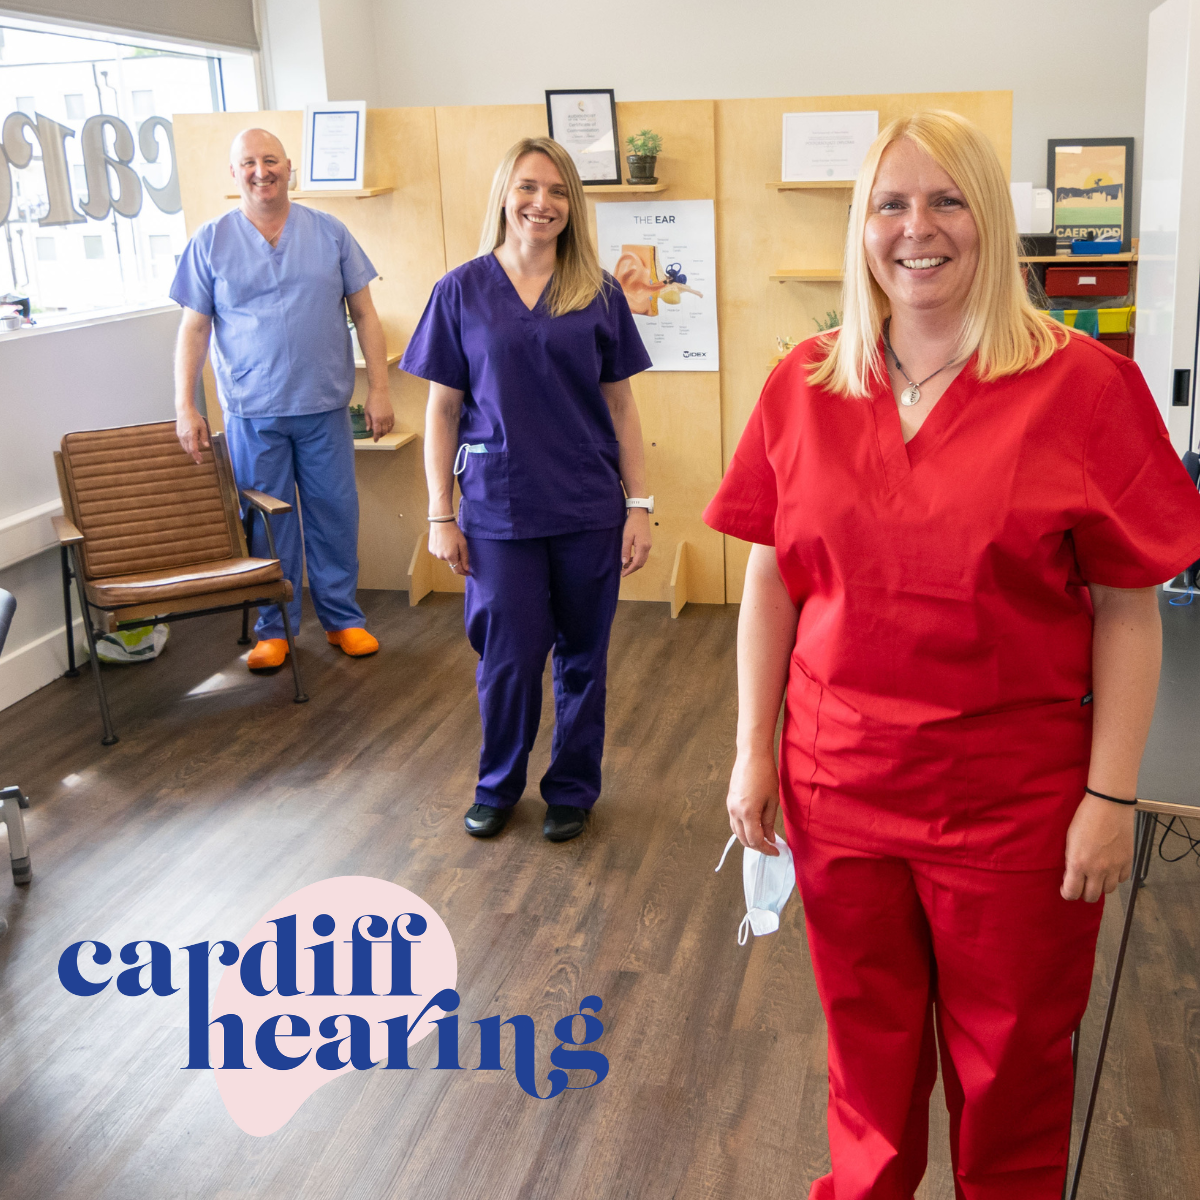 cardiff hearing